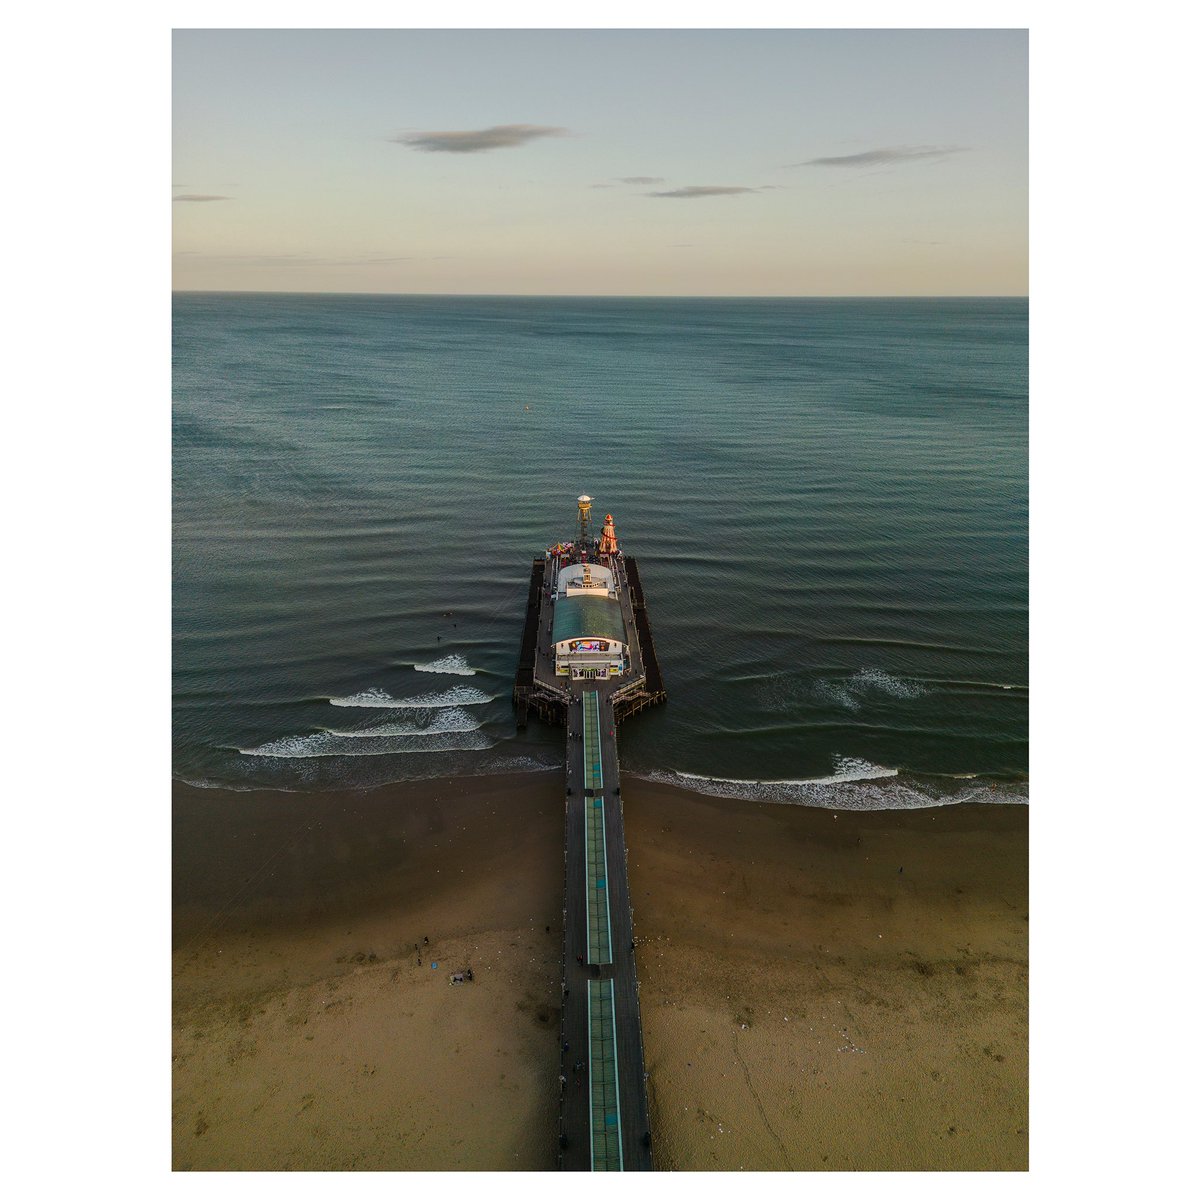 Bournemouth Pier © Chris Bailey 2023 📸

#Bournemouth #BournemouthPier #DJI #Drone #Droneography #Droneograph #Dorset #VisitDorset #Pier #SouthCoast #BournwmouthBeach #BournemouthUK 

@VisitDorset @VisitDorsetBiz 📸